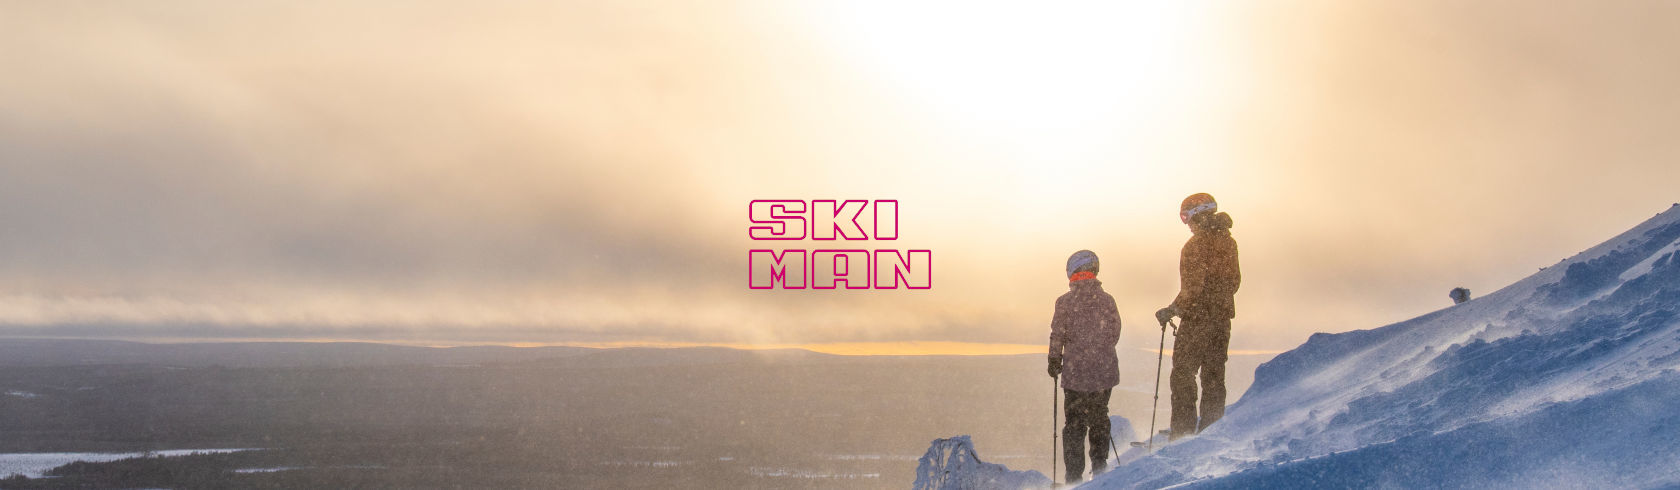 Ski Man brand logo